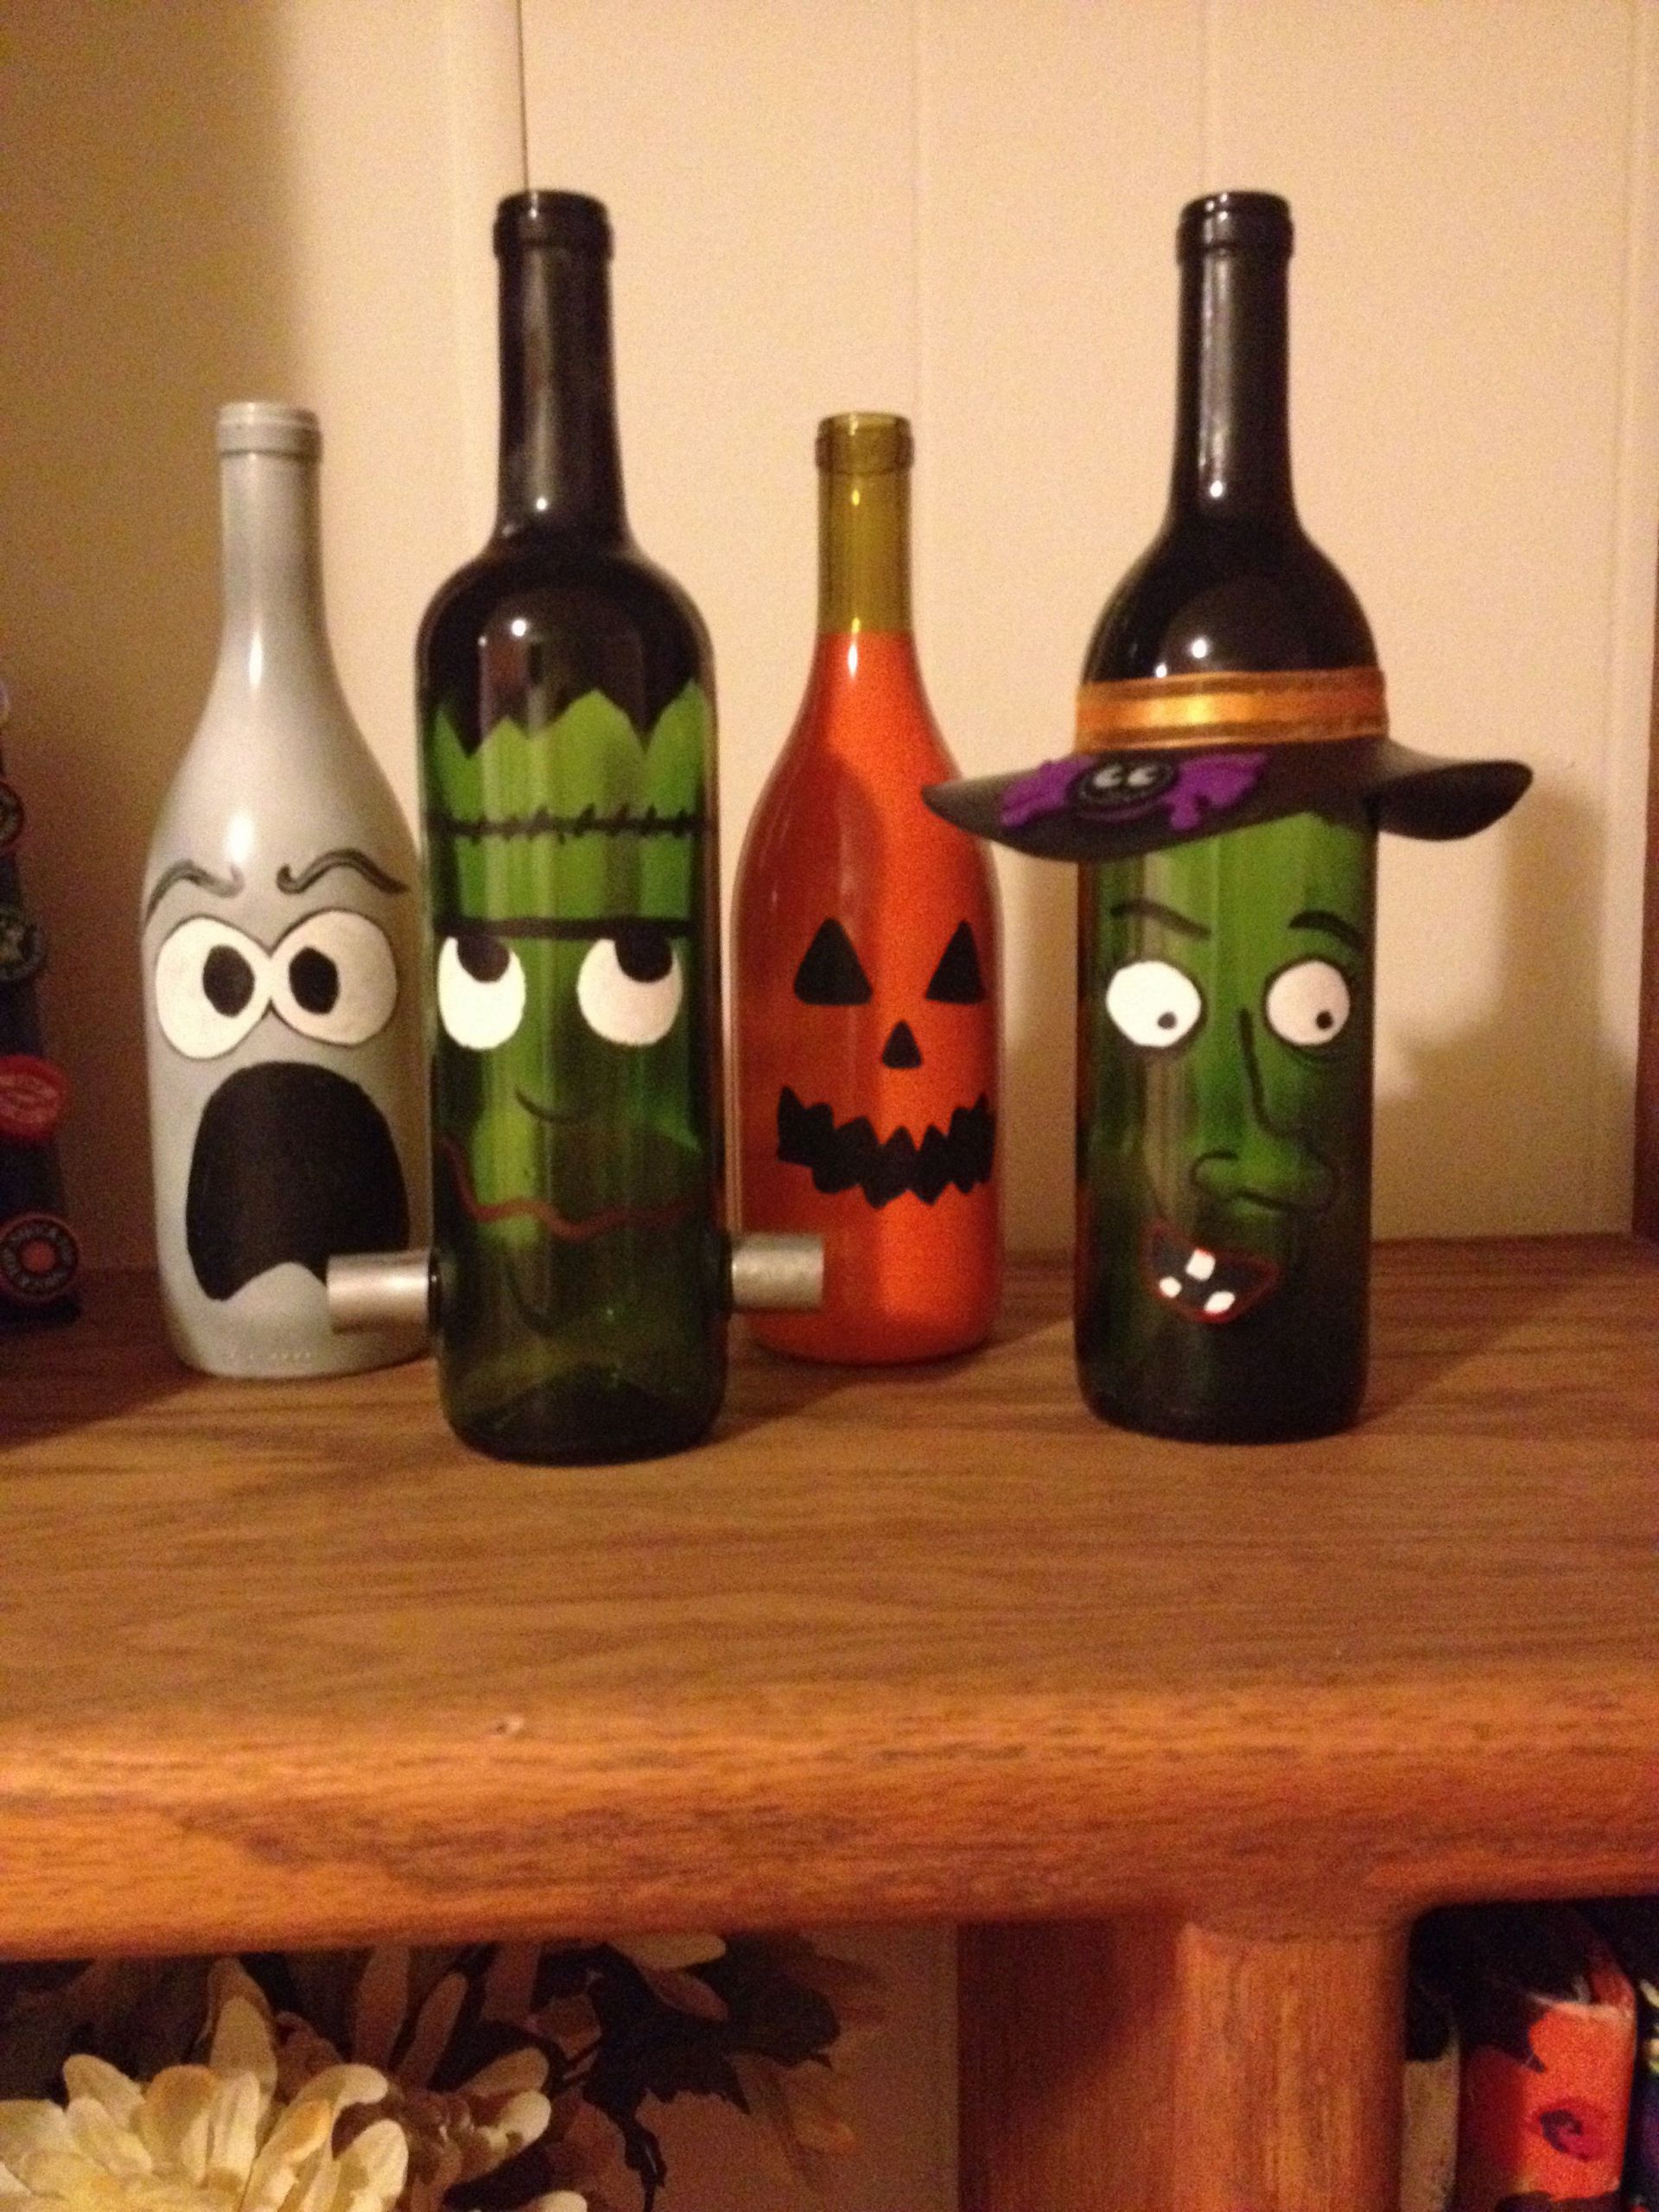 DIY Wine Bottle Decorating Ideas
 Painted wine bottle decor halloween diy Origami Owl independent Designer Christine Marques